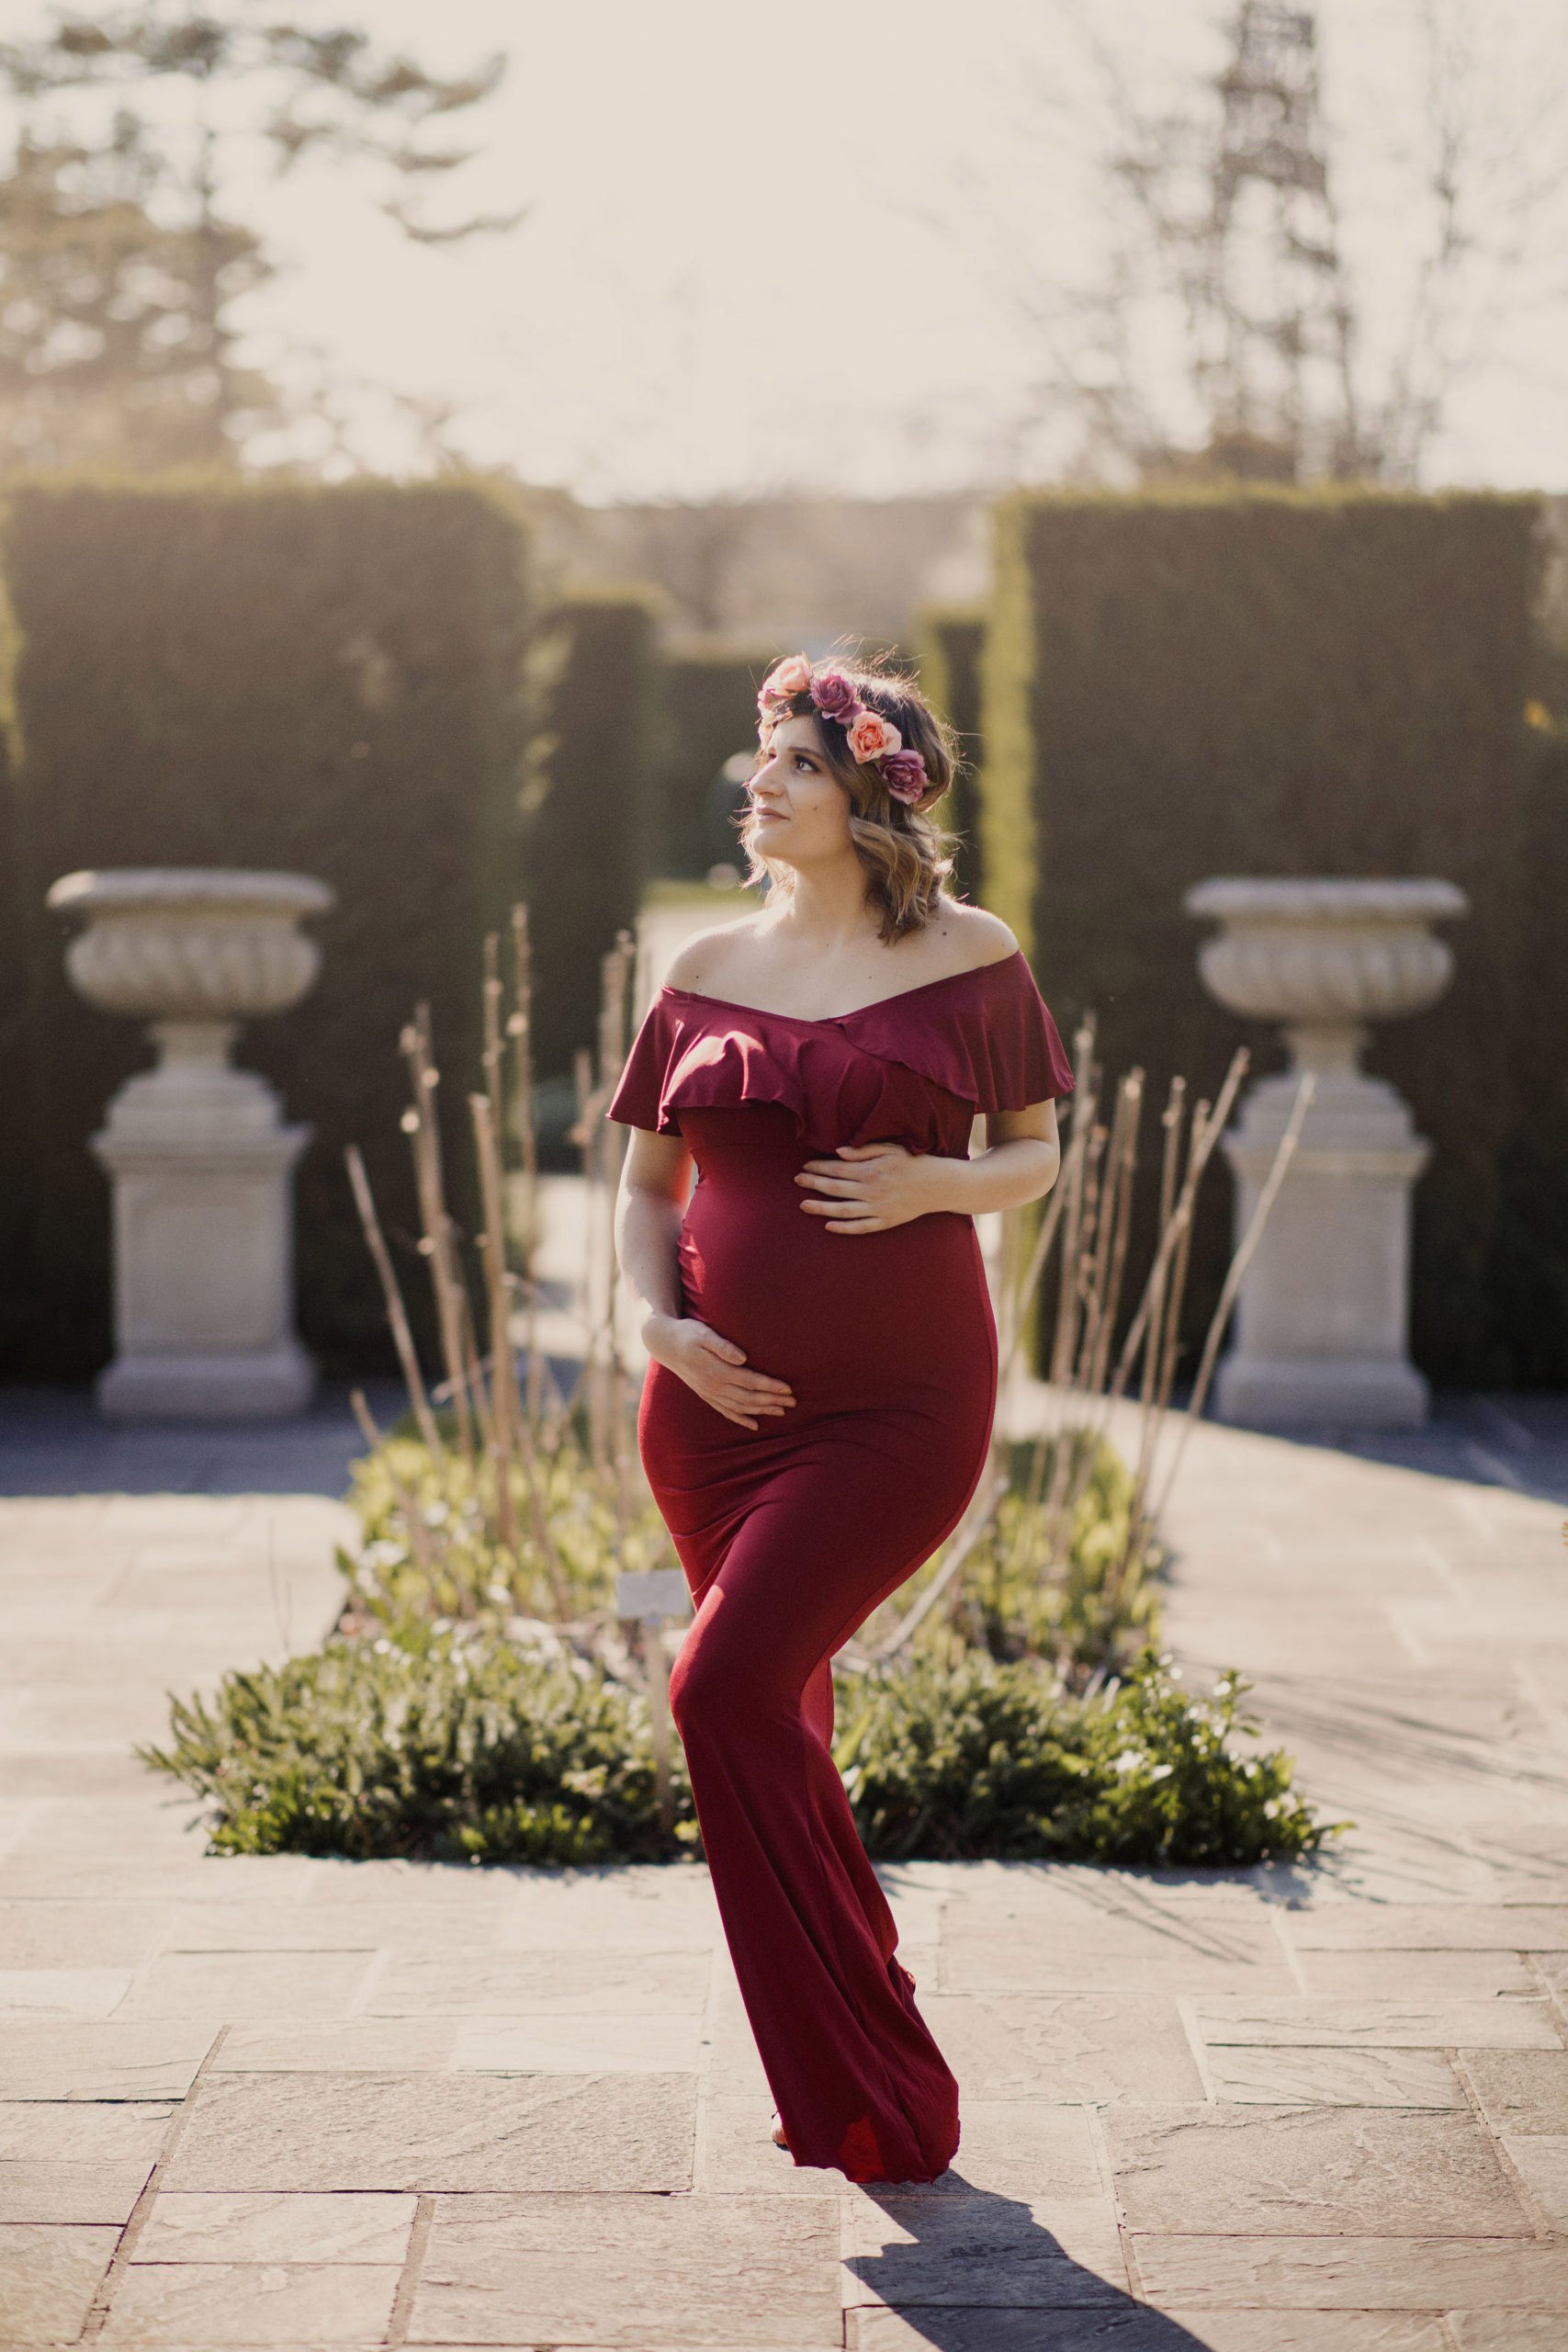 pregnant fine art photography looks like vogue